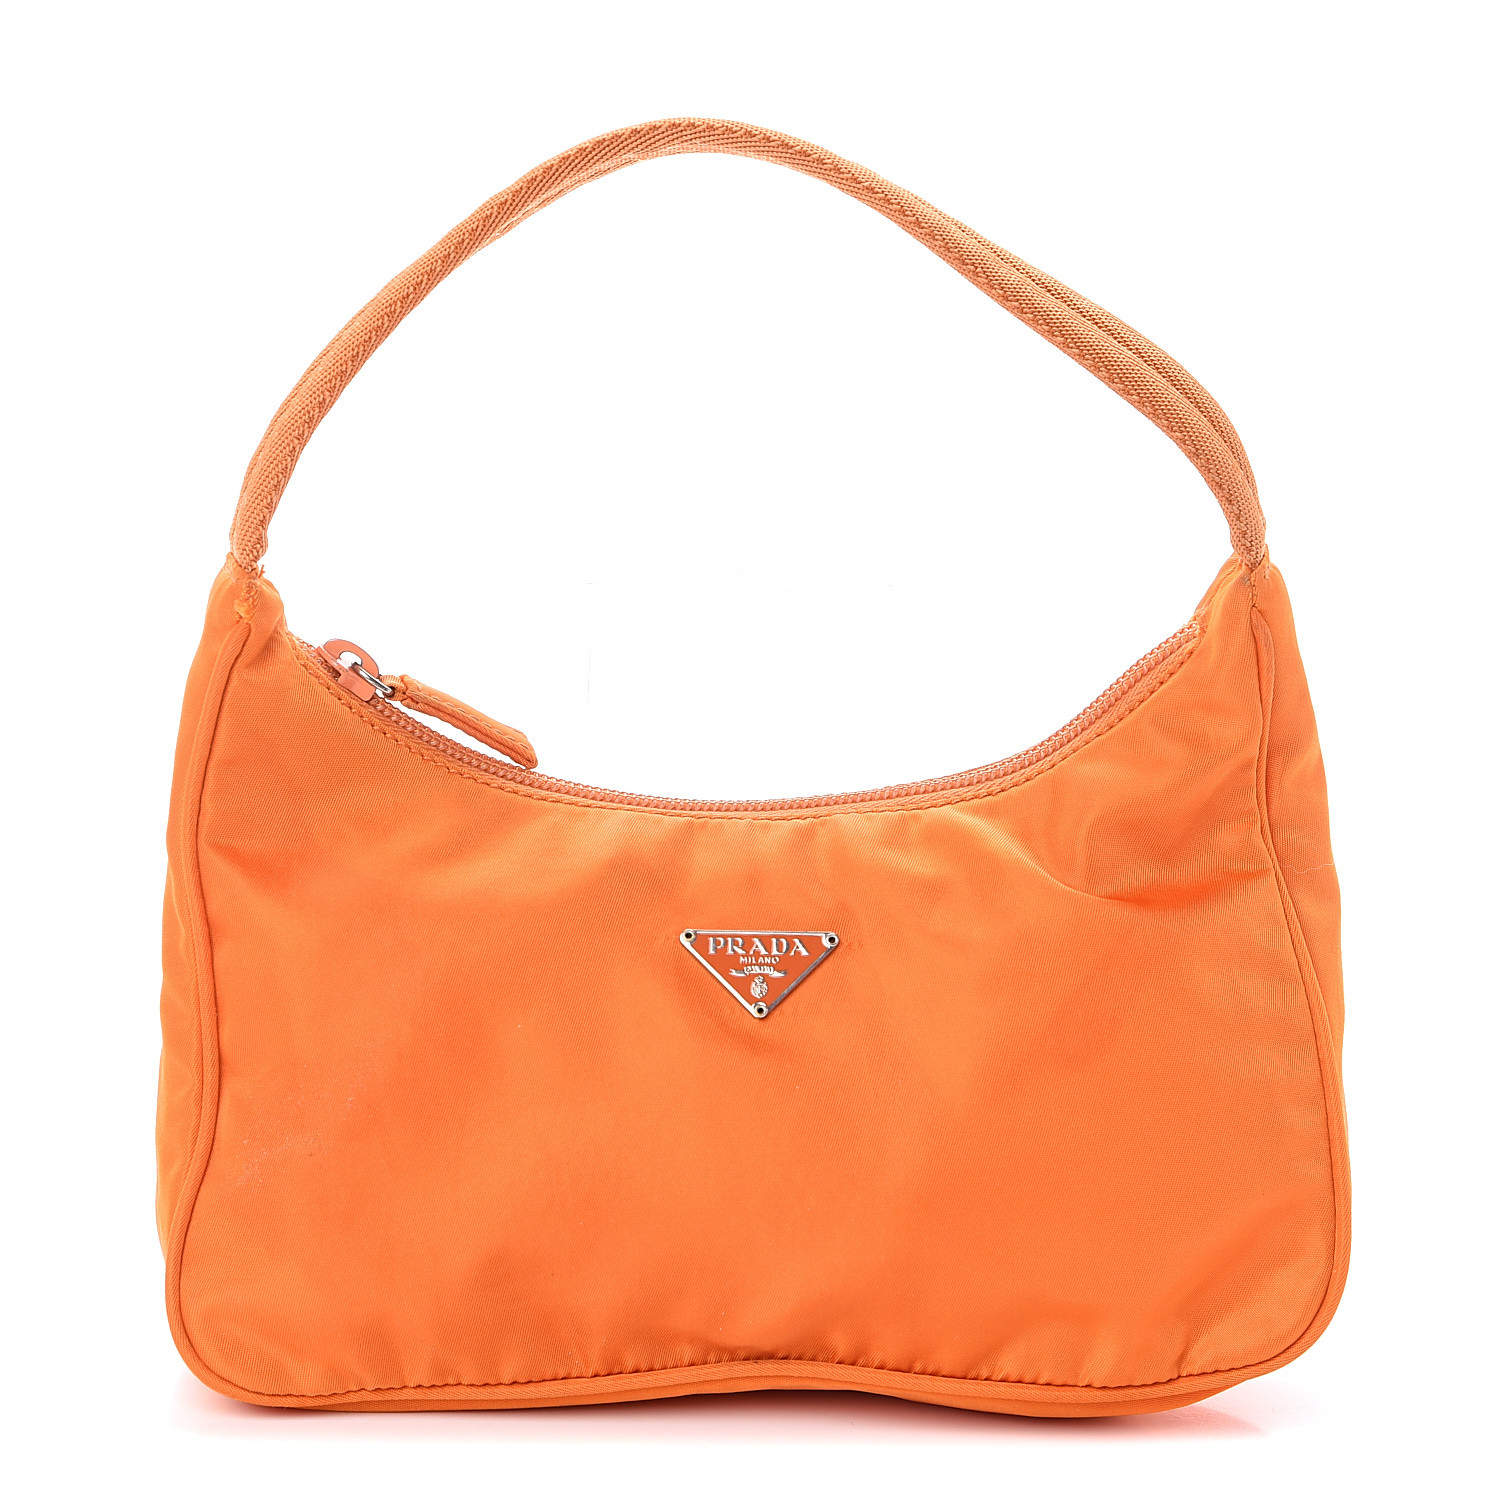 prada orange handbag